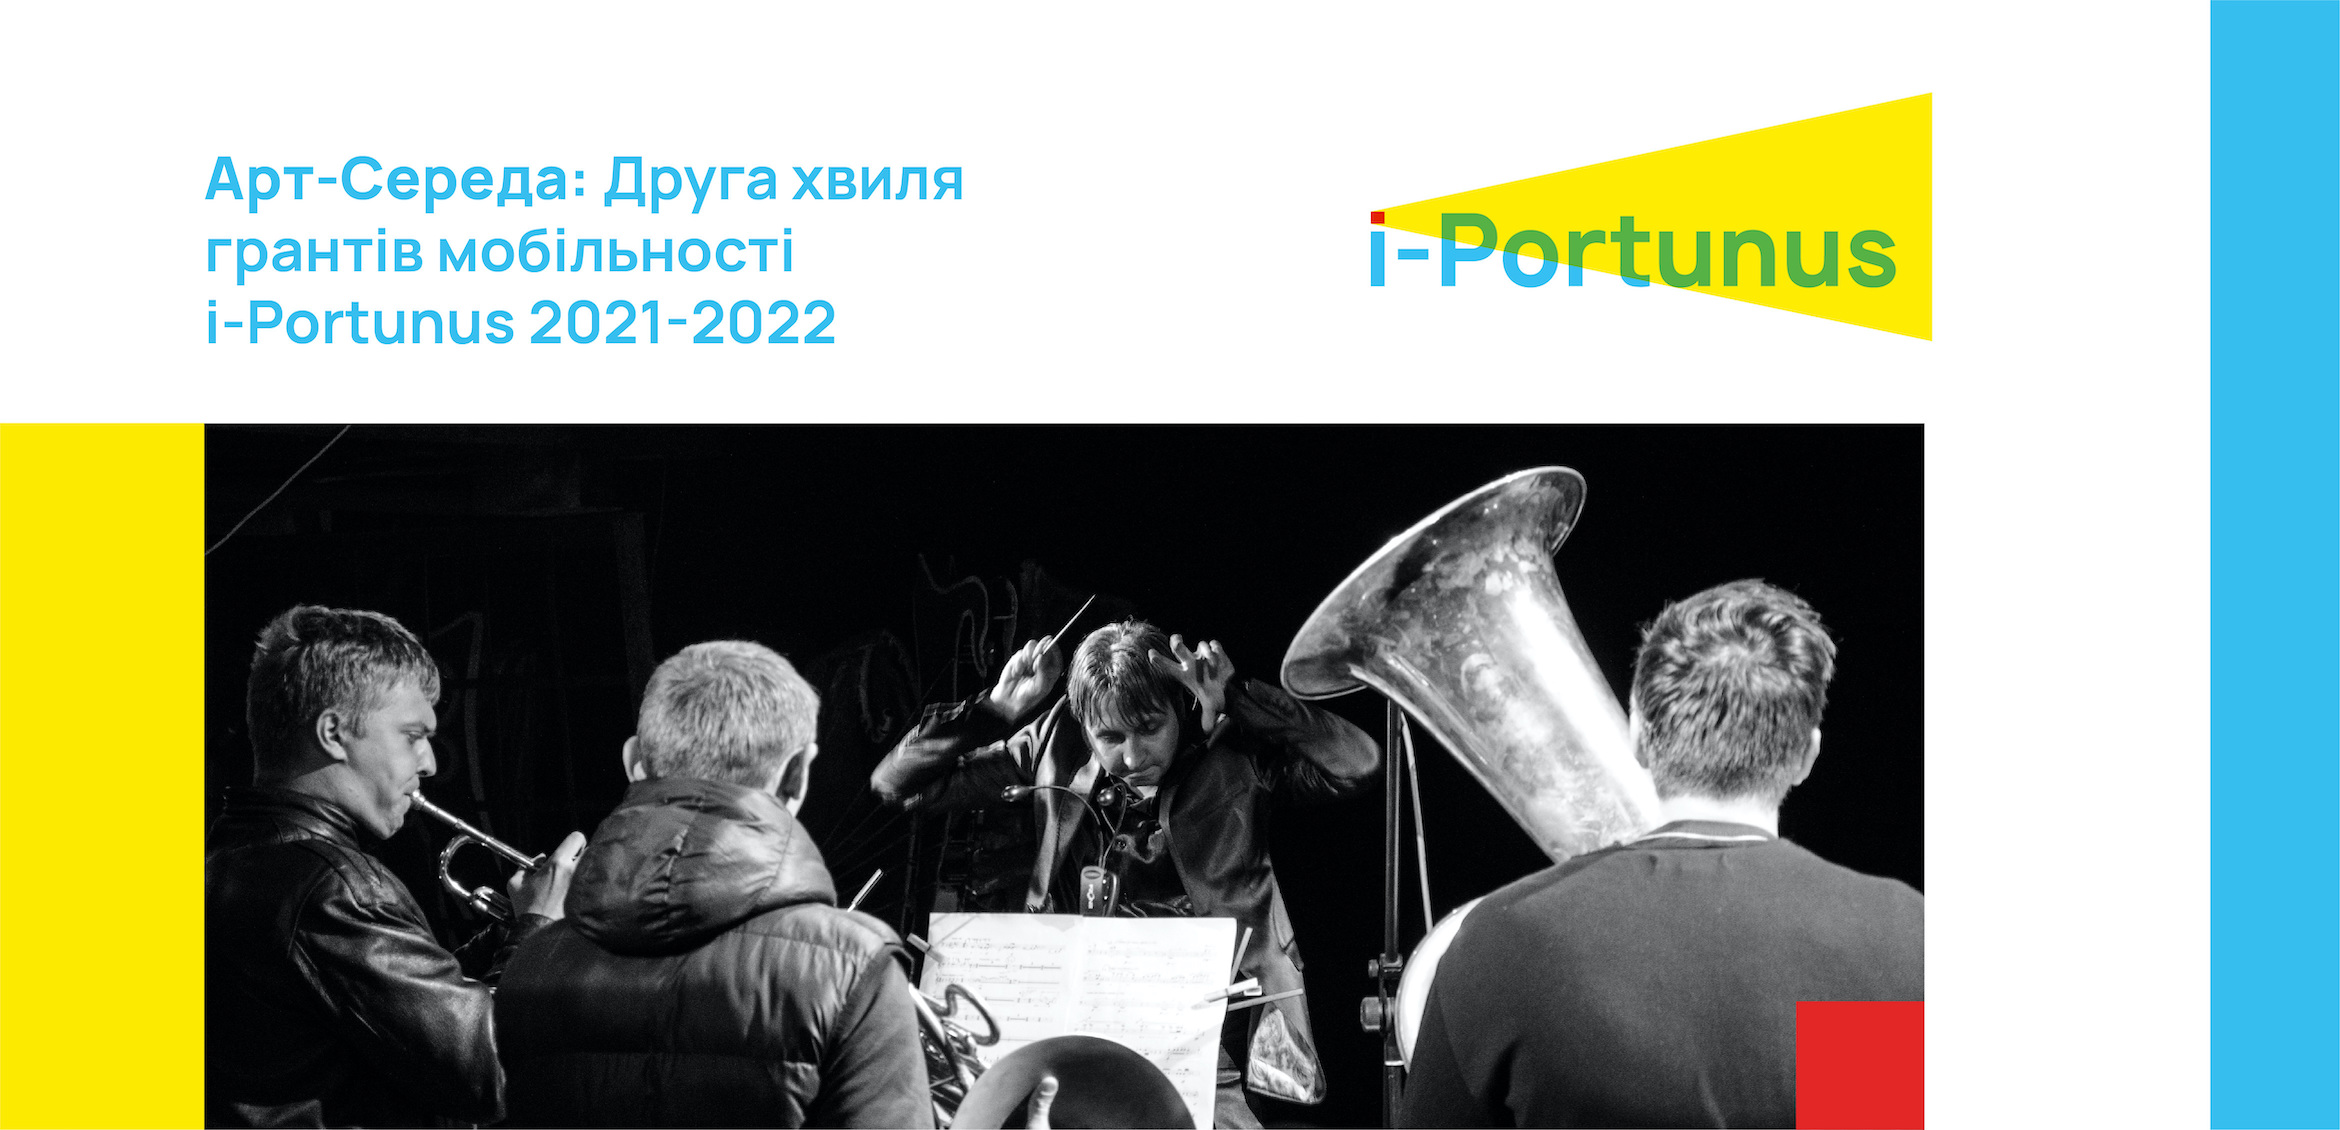 Art-Sereda: The second wave of i-Portunus 2021-2022 mobility grants